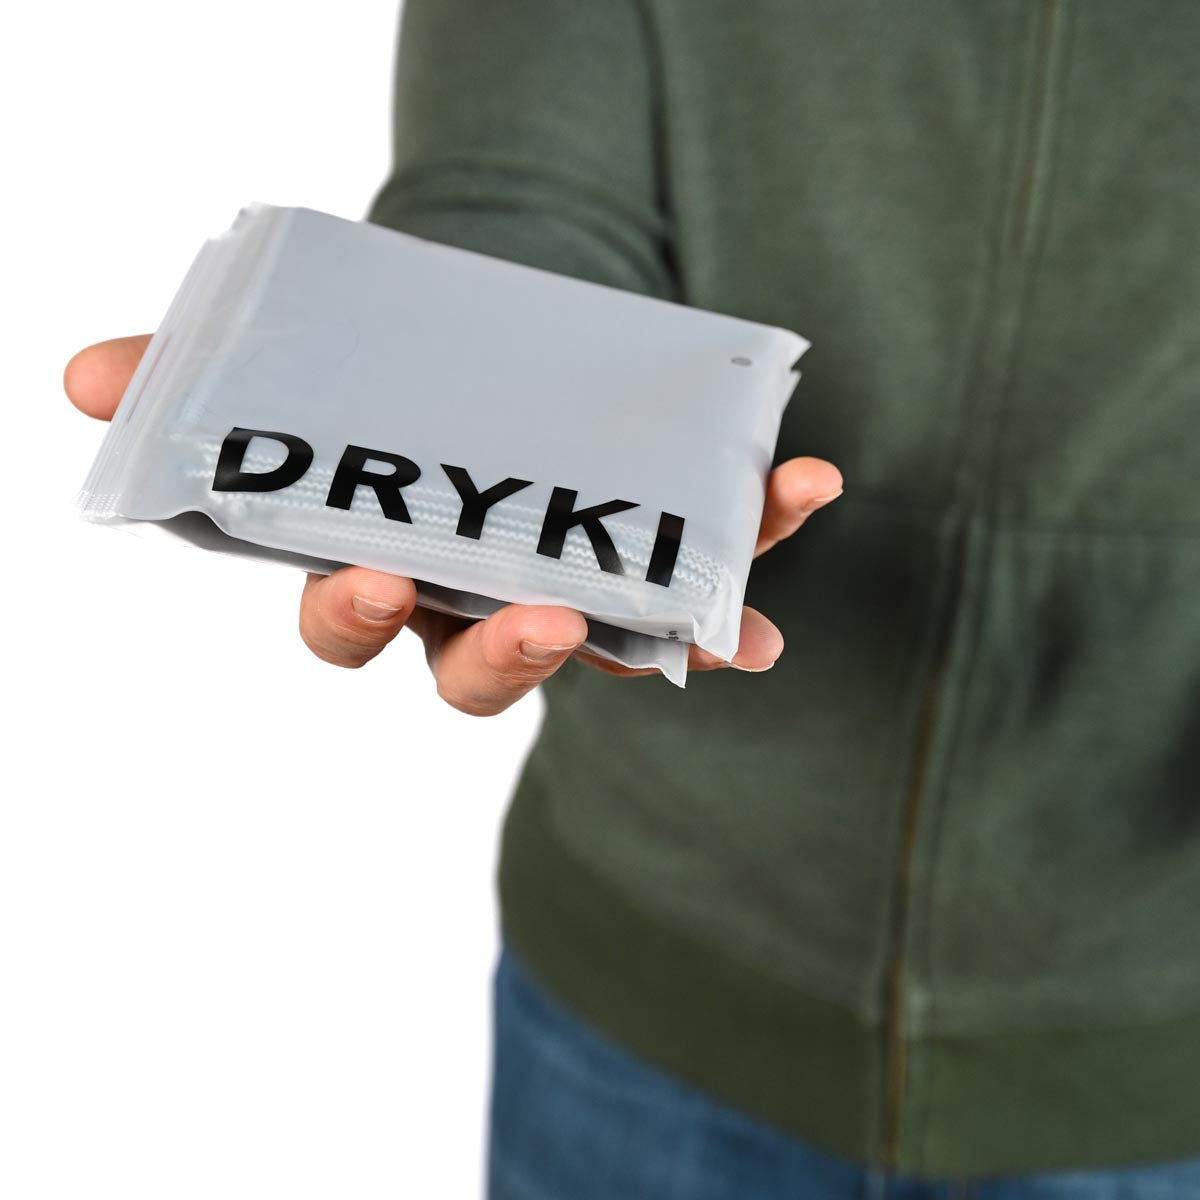 DRYKI GIFT CARD